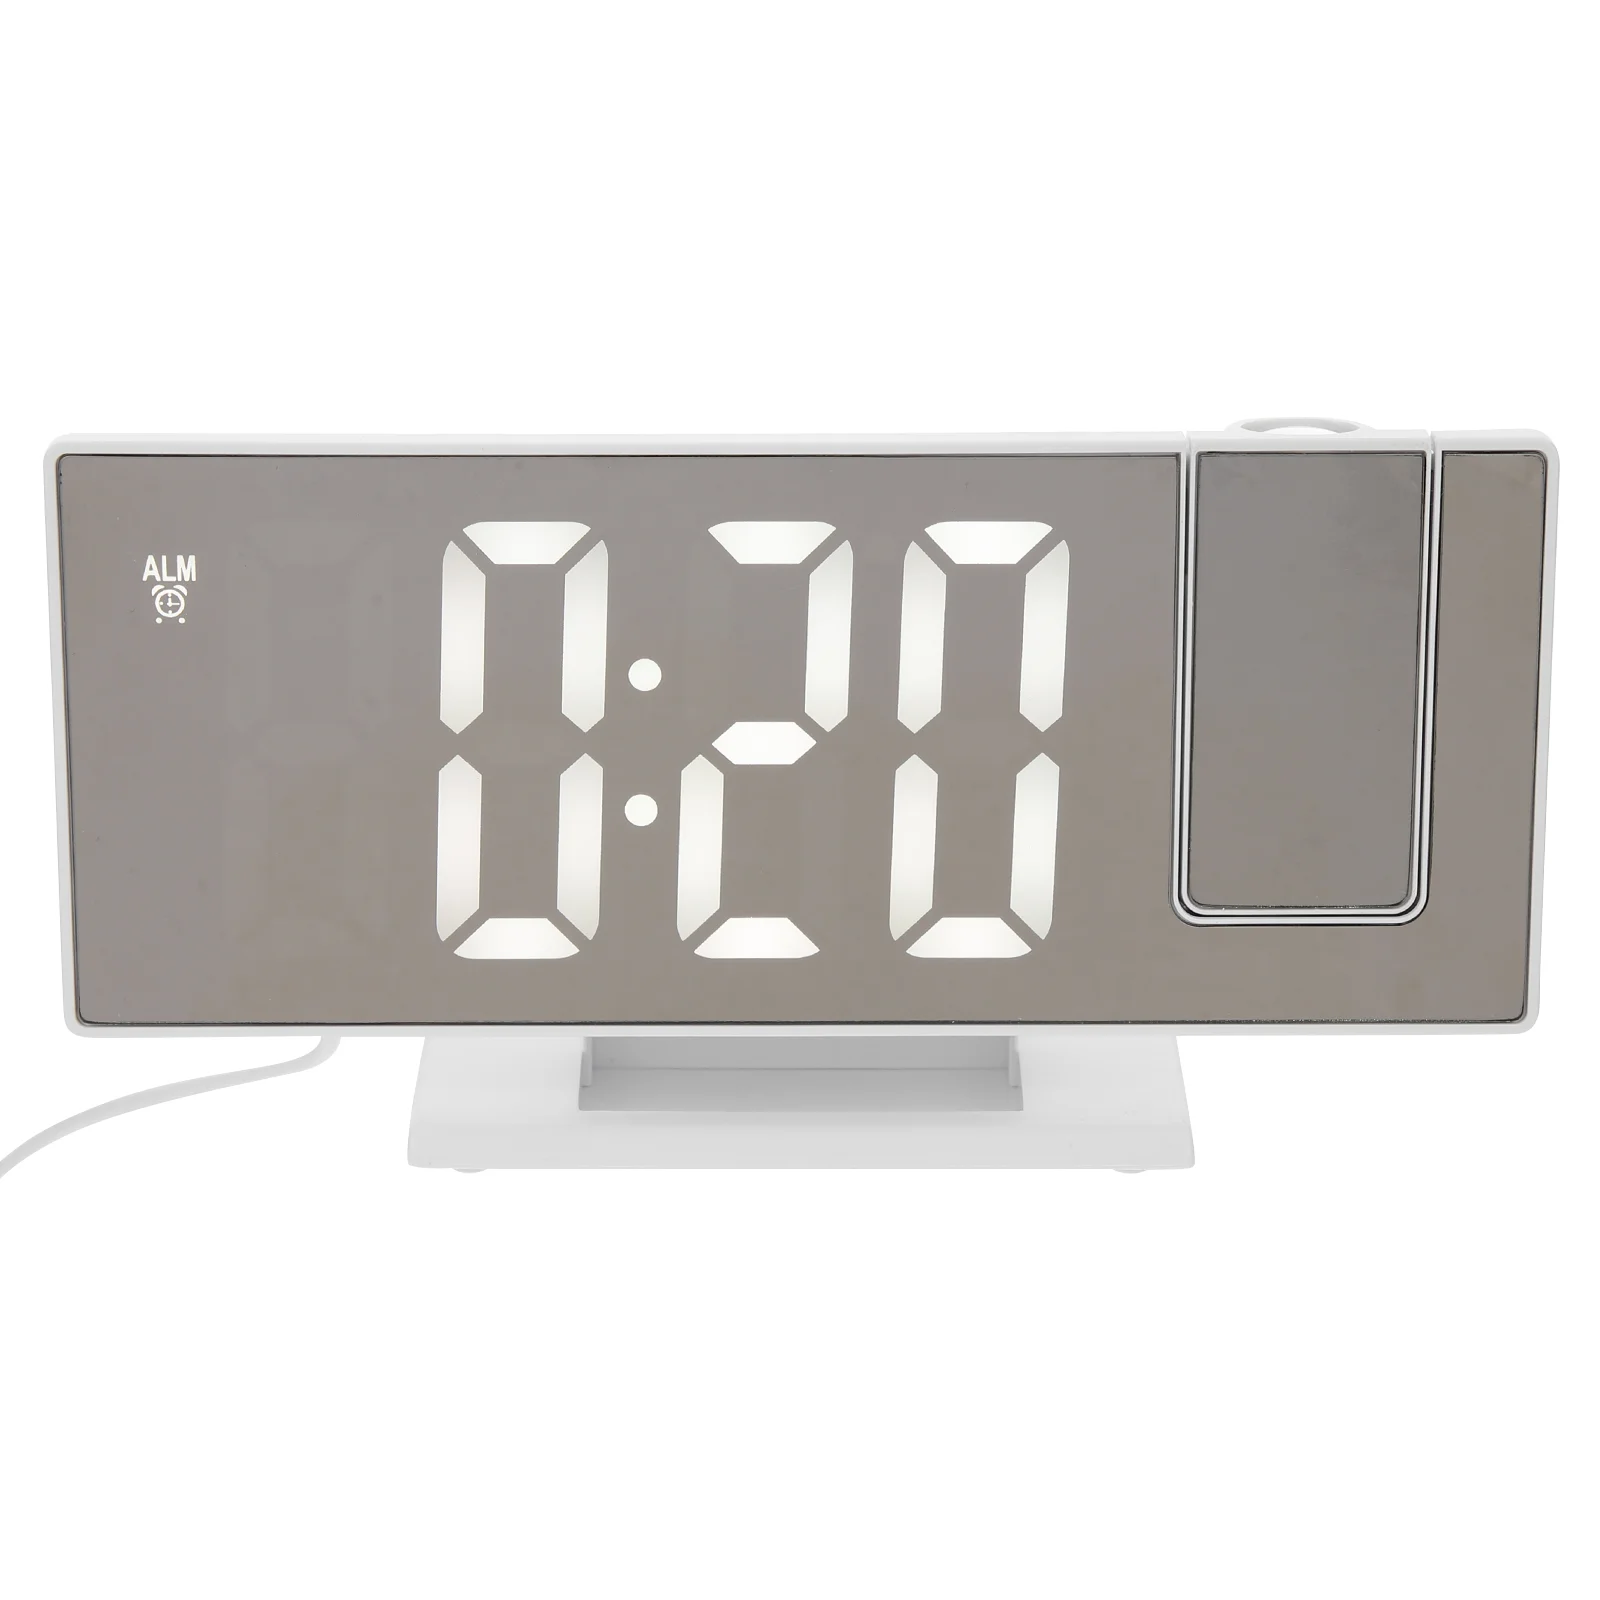 

1 Set Delicate Travel Projector Clock Alarm Clock With Projection On Ceiling Projection Clock for Home Living Room Decorate